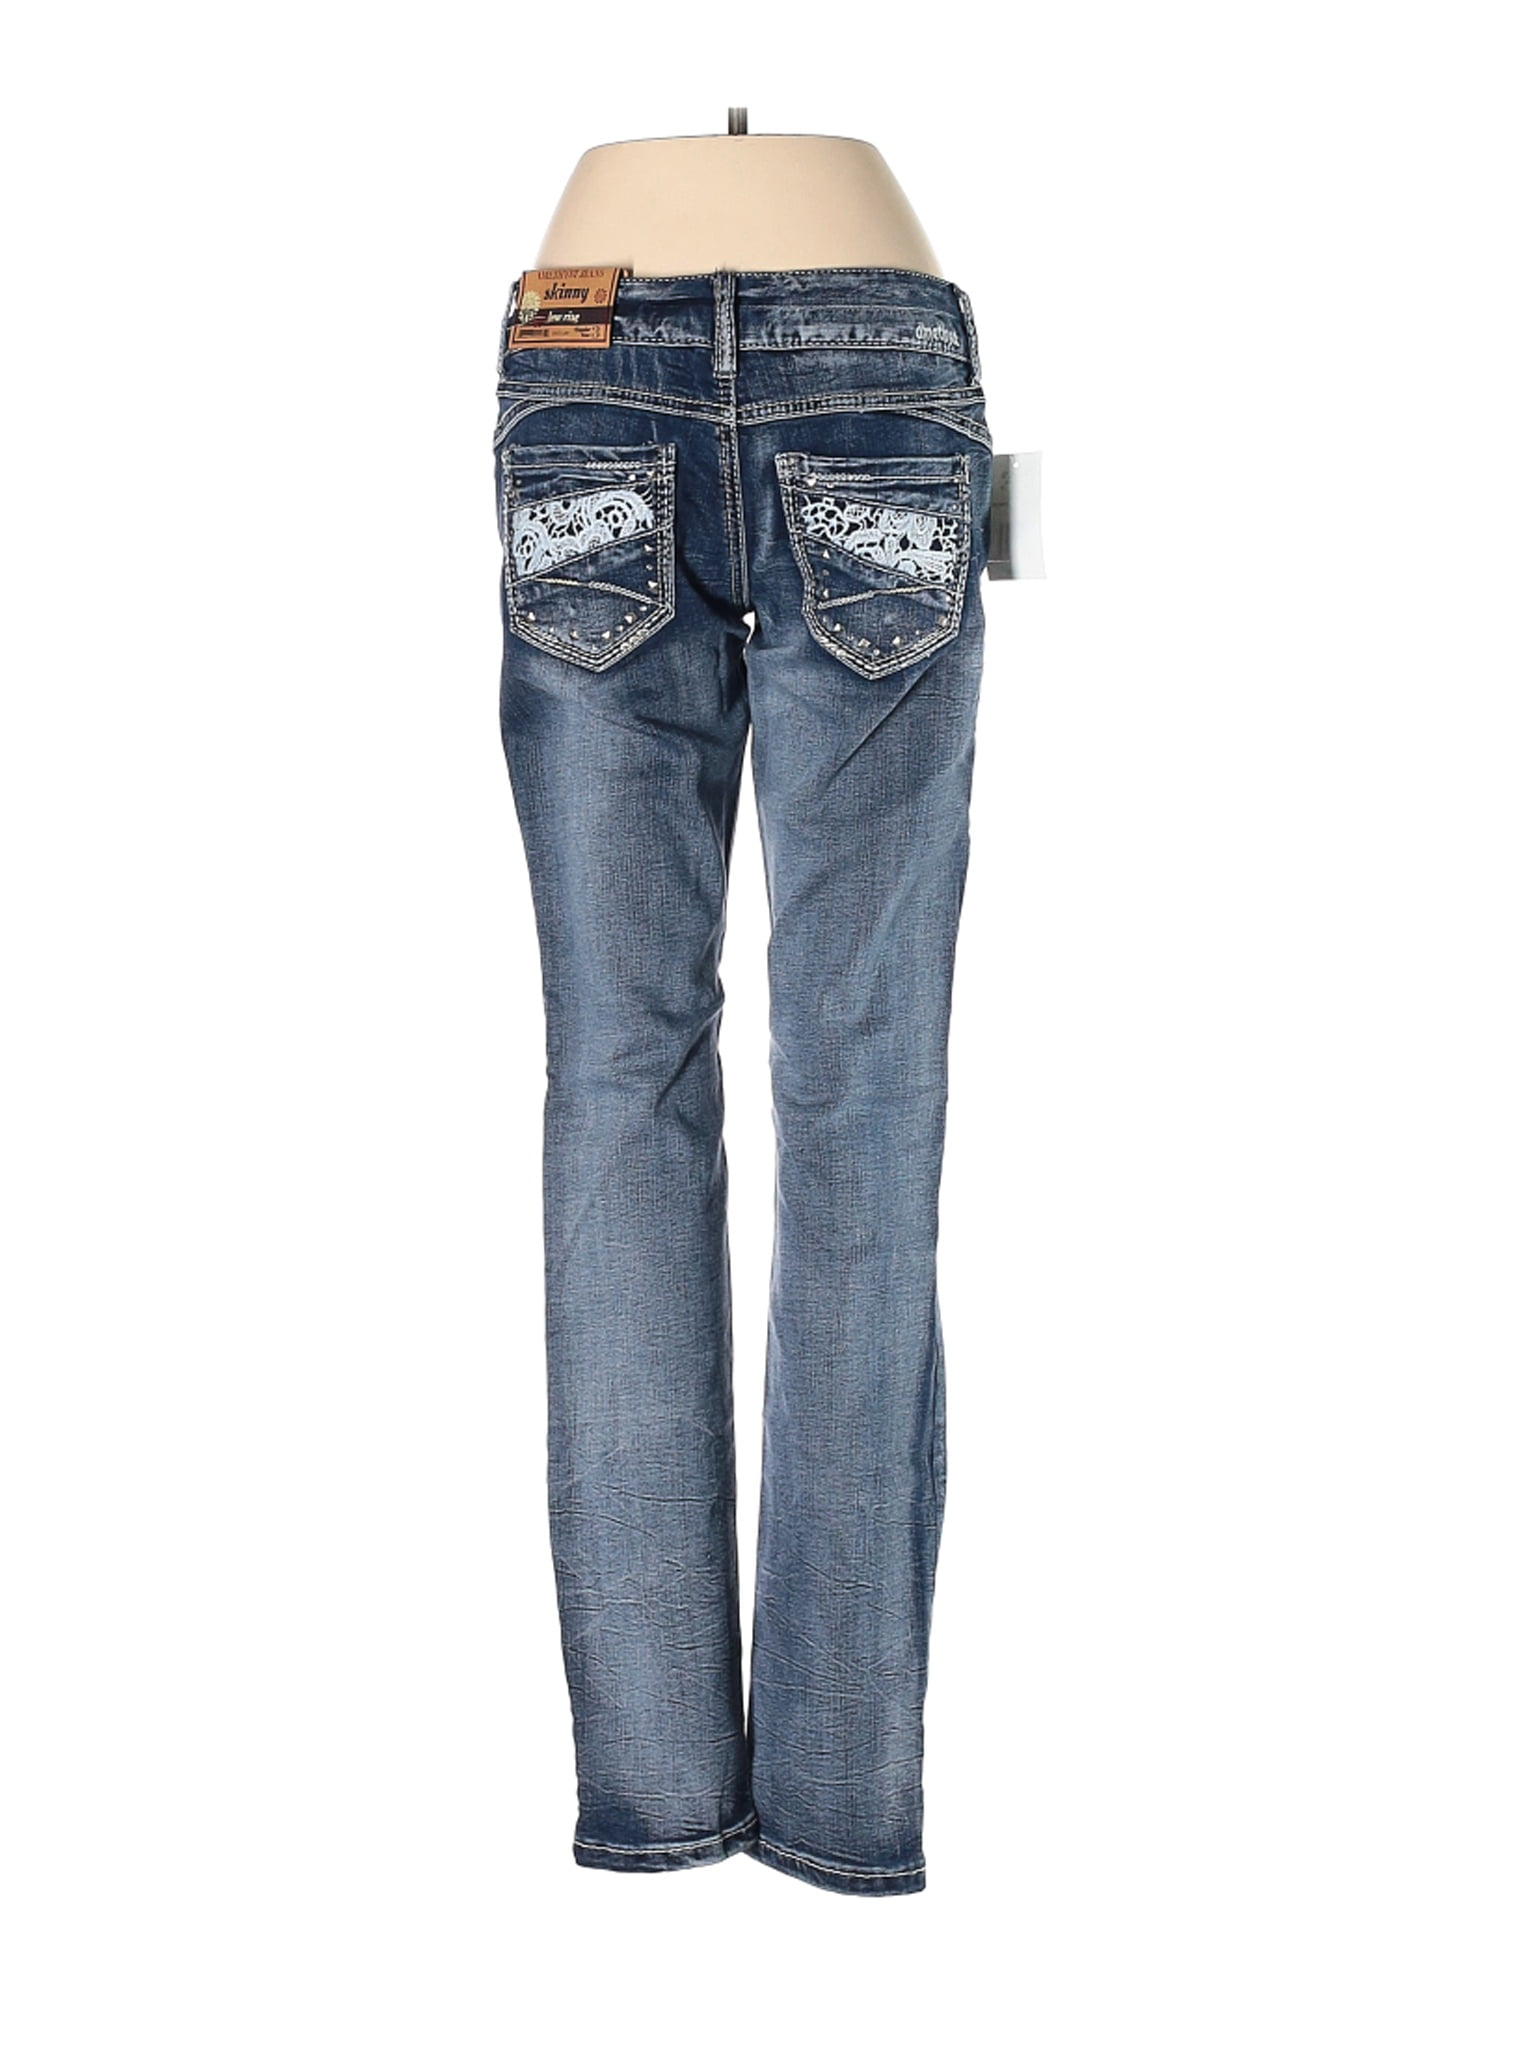 amethyst jeans size 18